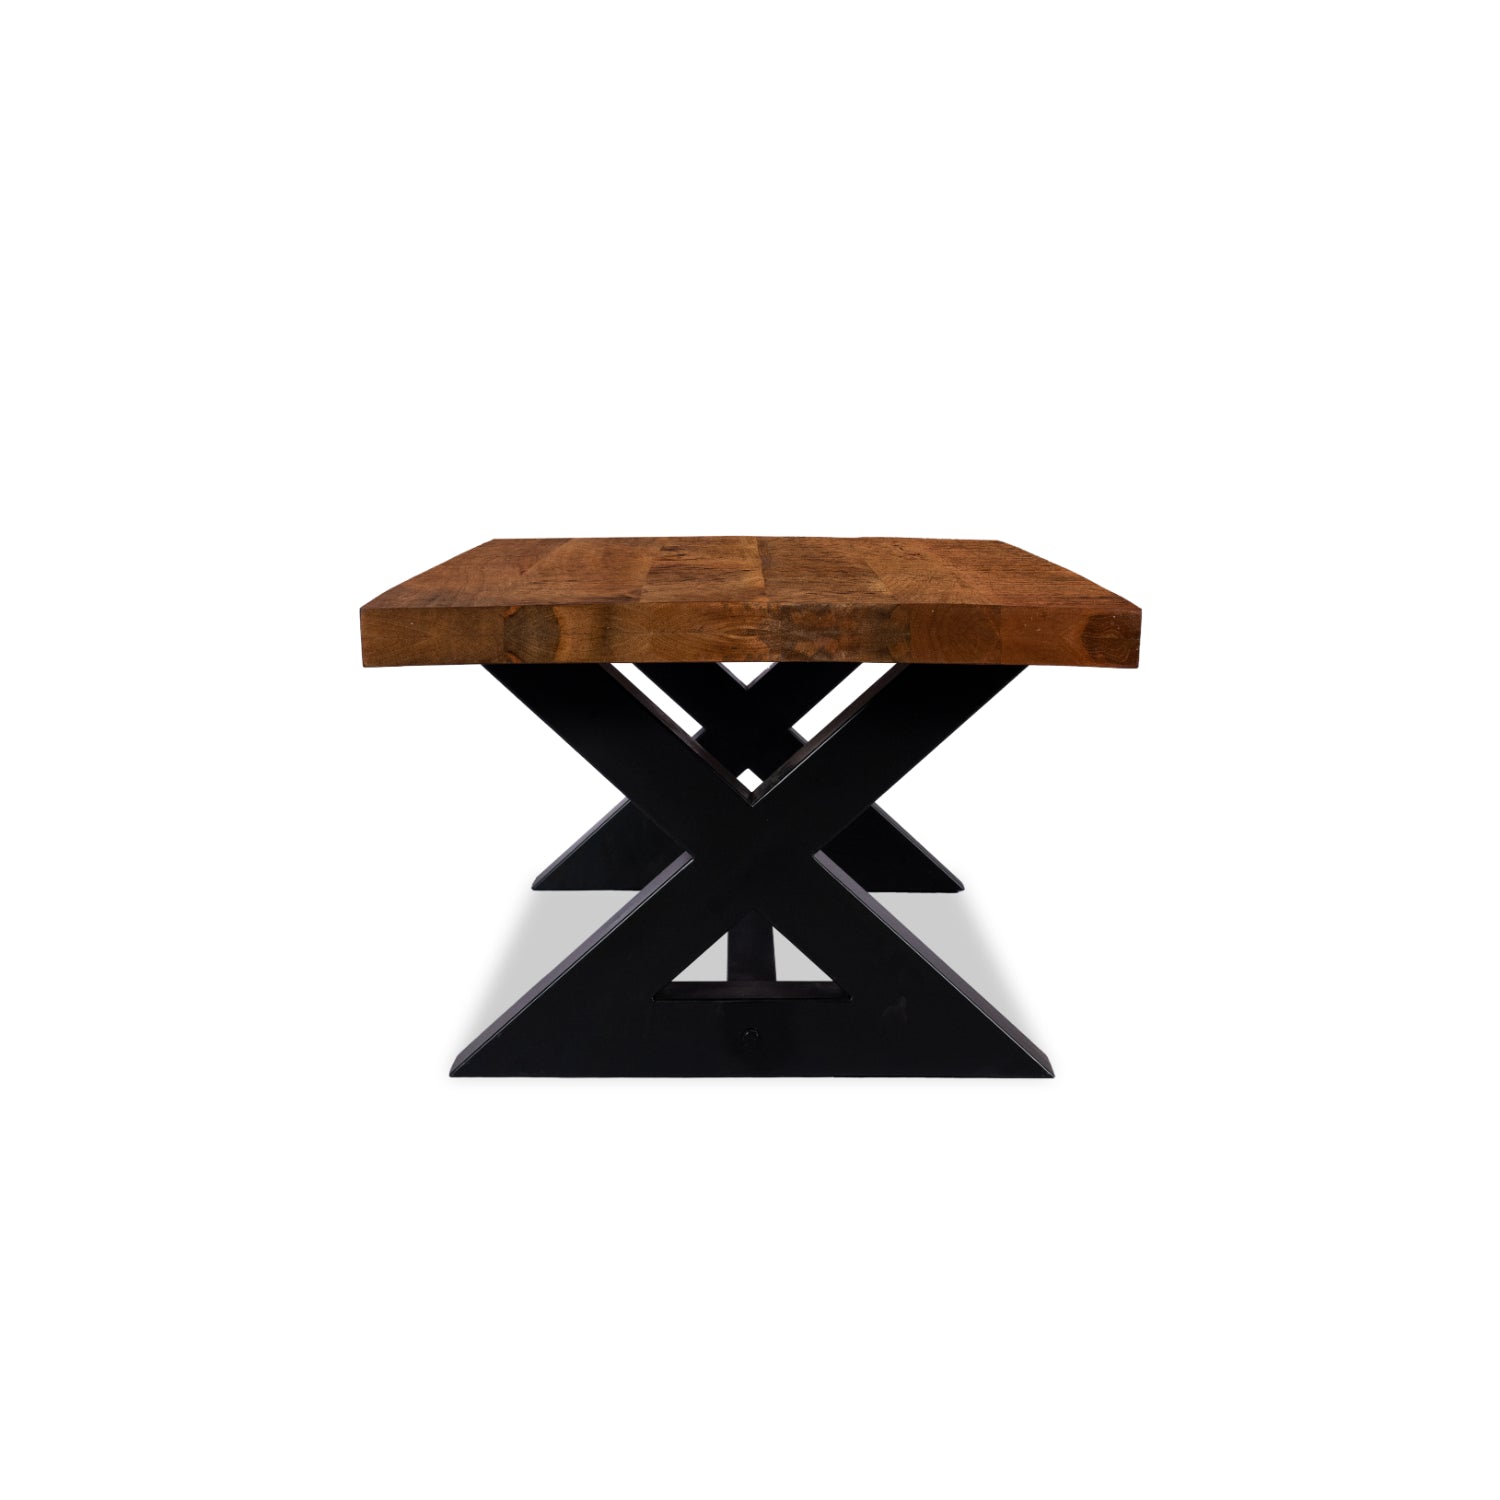 metal and wood coffee table